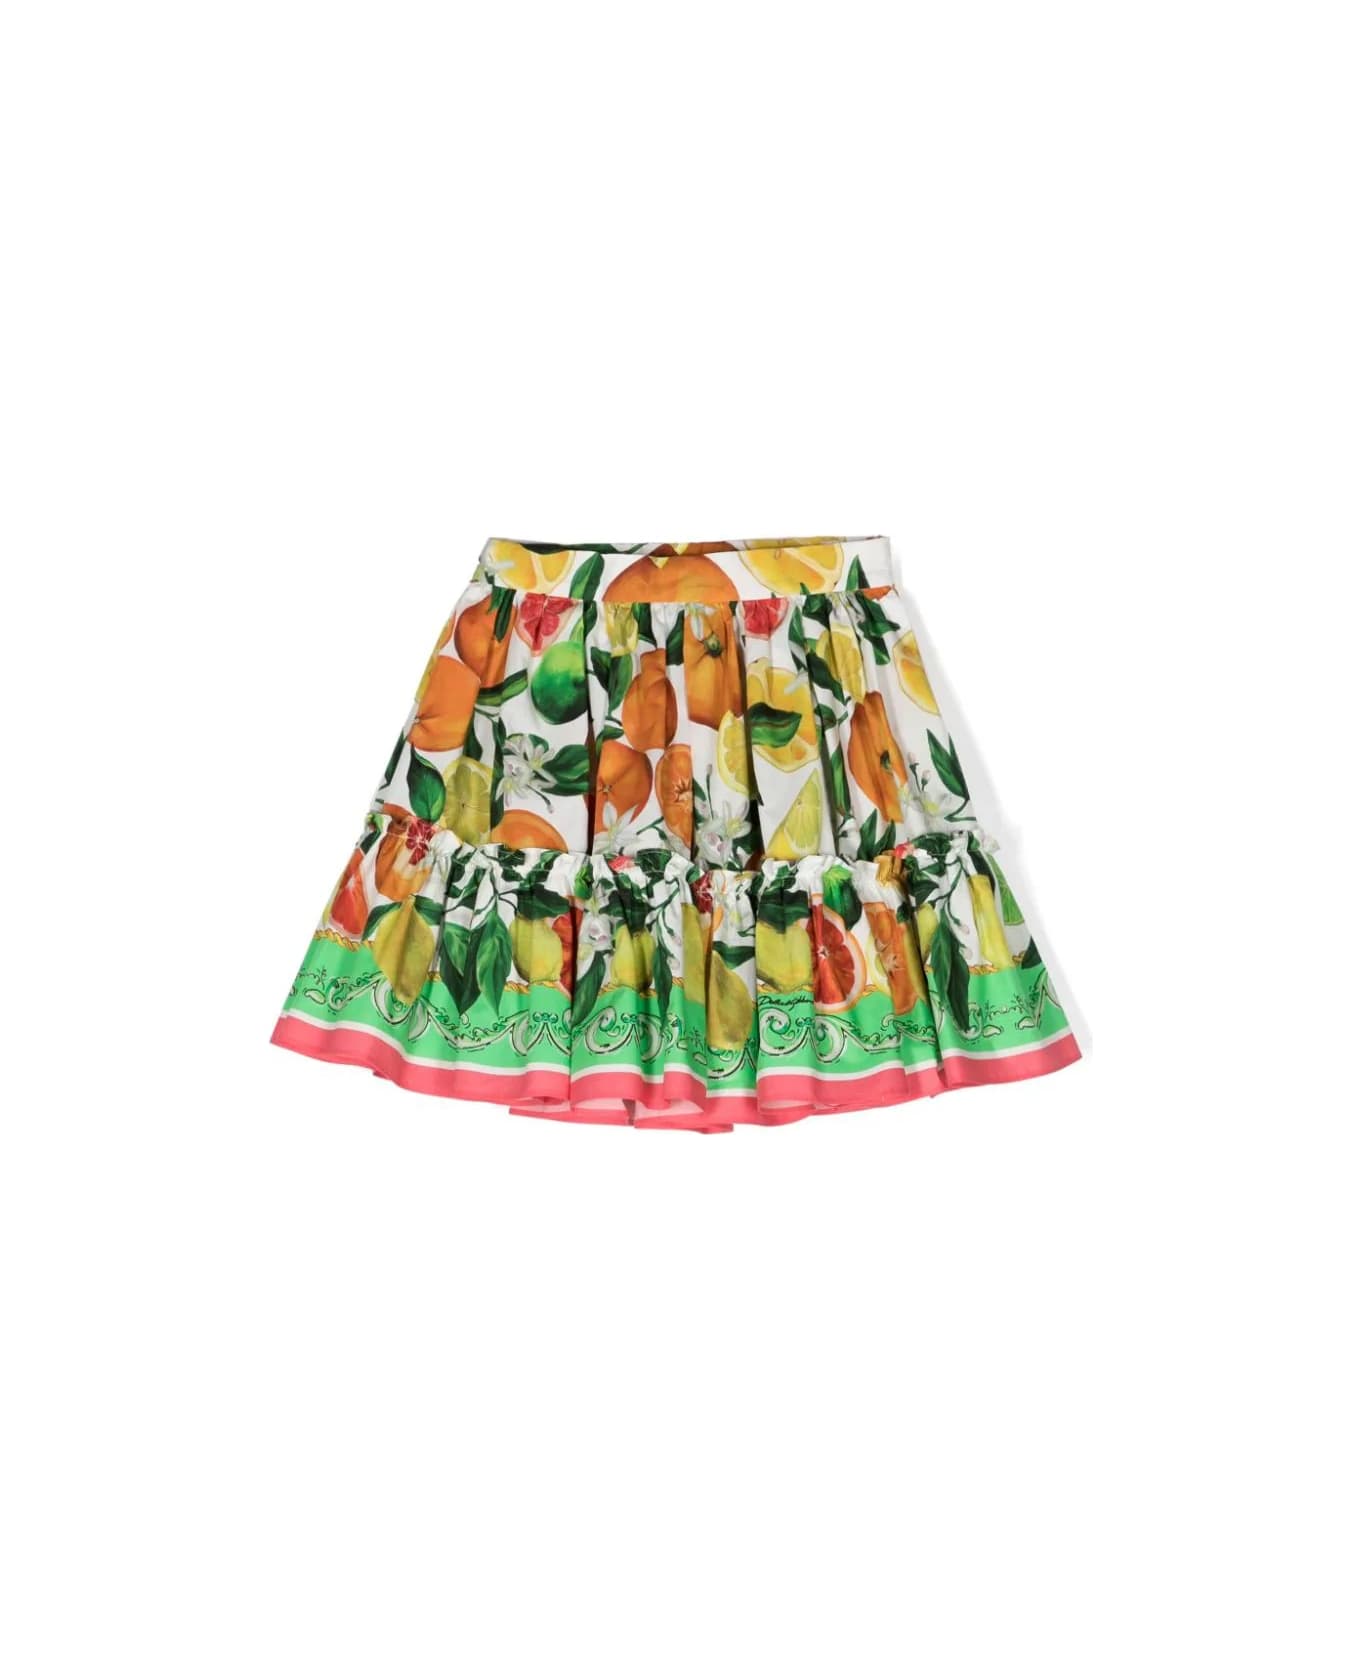 Dolce & Gabbana Miniskirt With Orange And Lemon Print - Multicolour